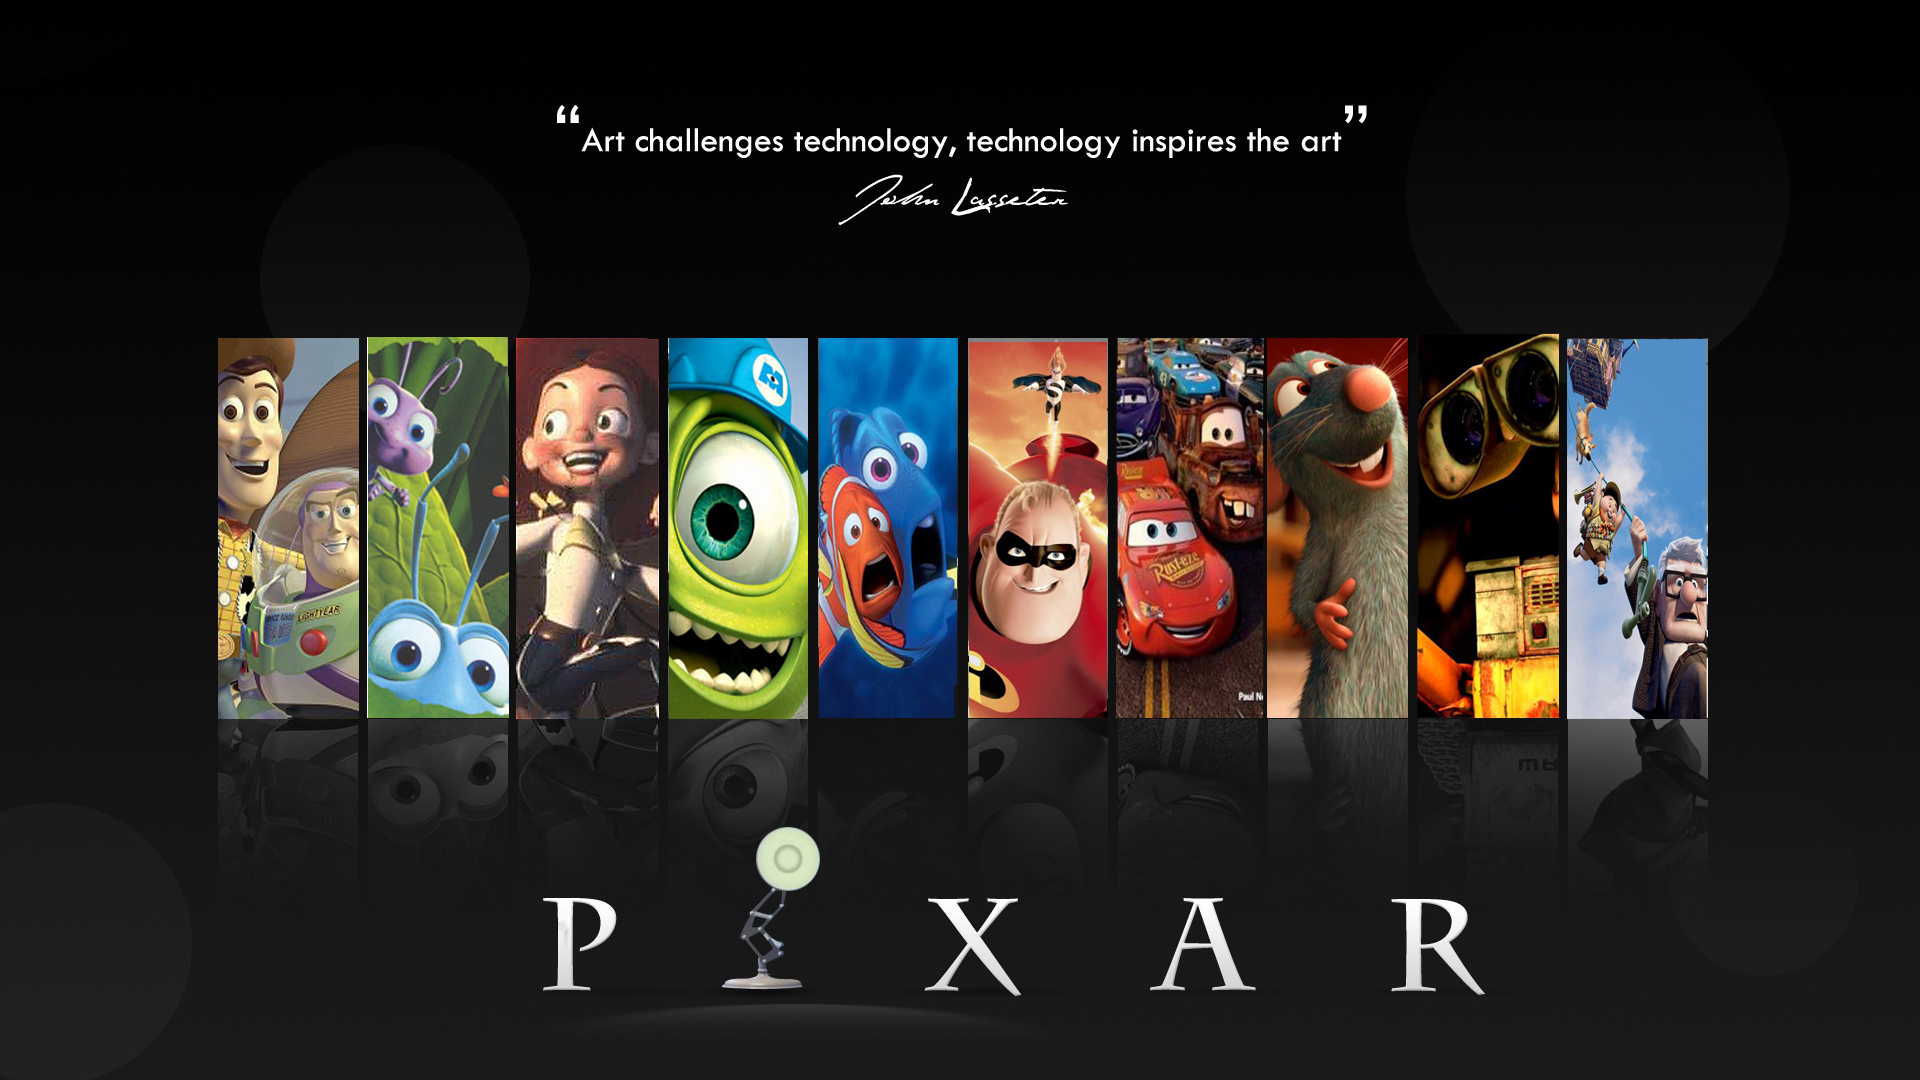 Pixar Movies HD Wallpaper FullHDWpp   Full HD Wallpapers 1920x1080 1920x1080